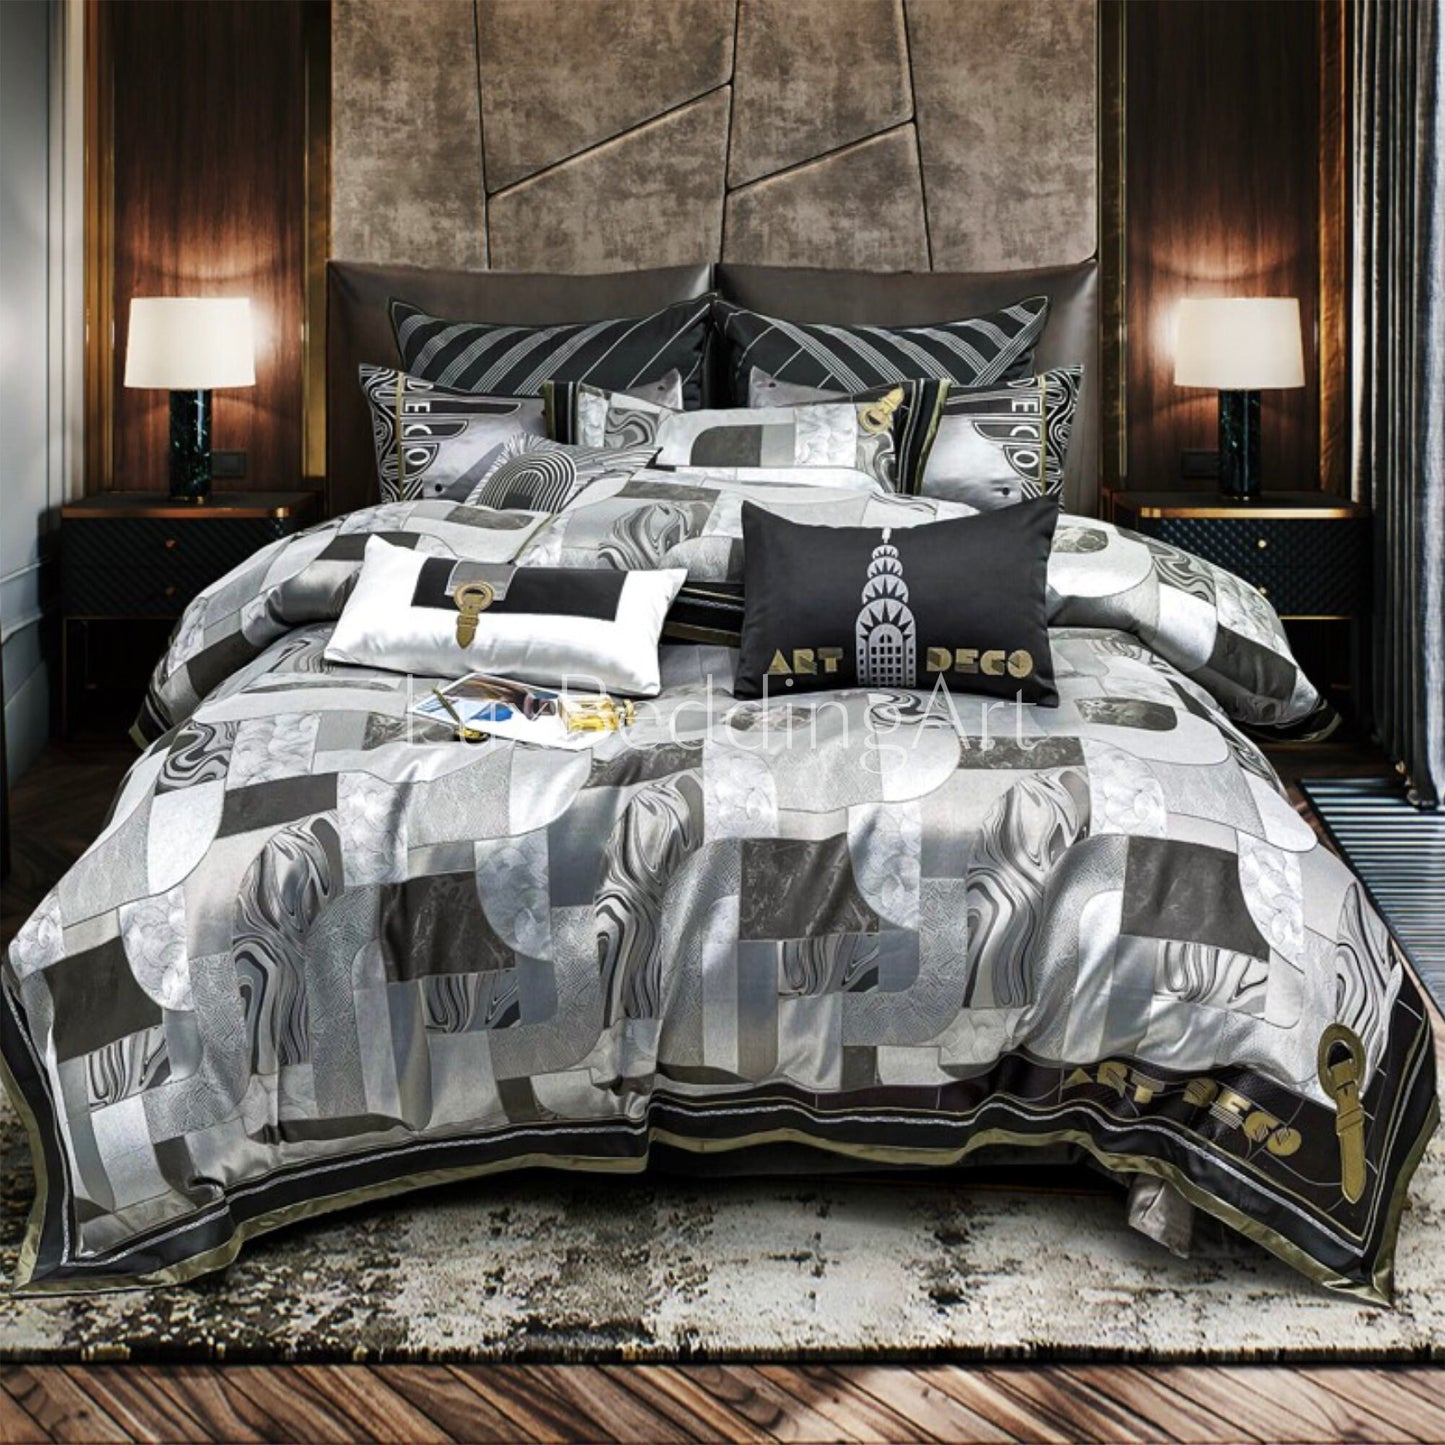 Luxury Premium Large Jacquard with Embroidery Gris Art Deco style design Bedding Set  • 4/6/10/12 PCS